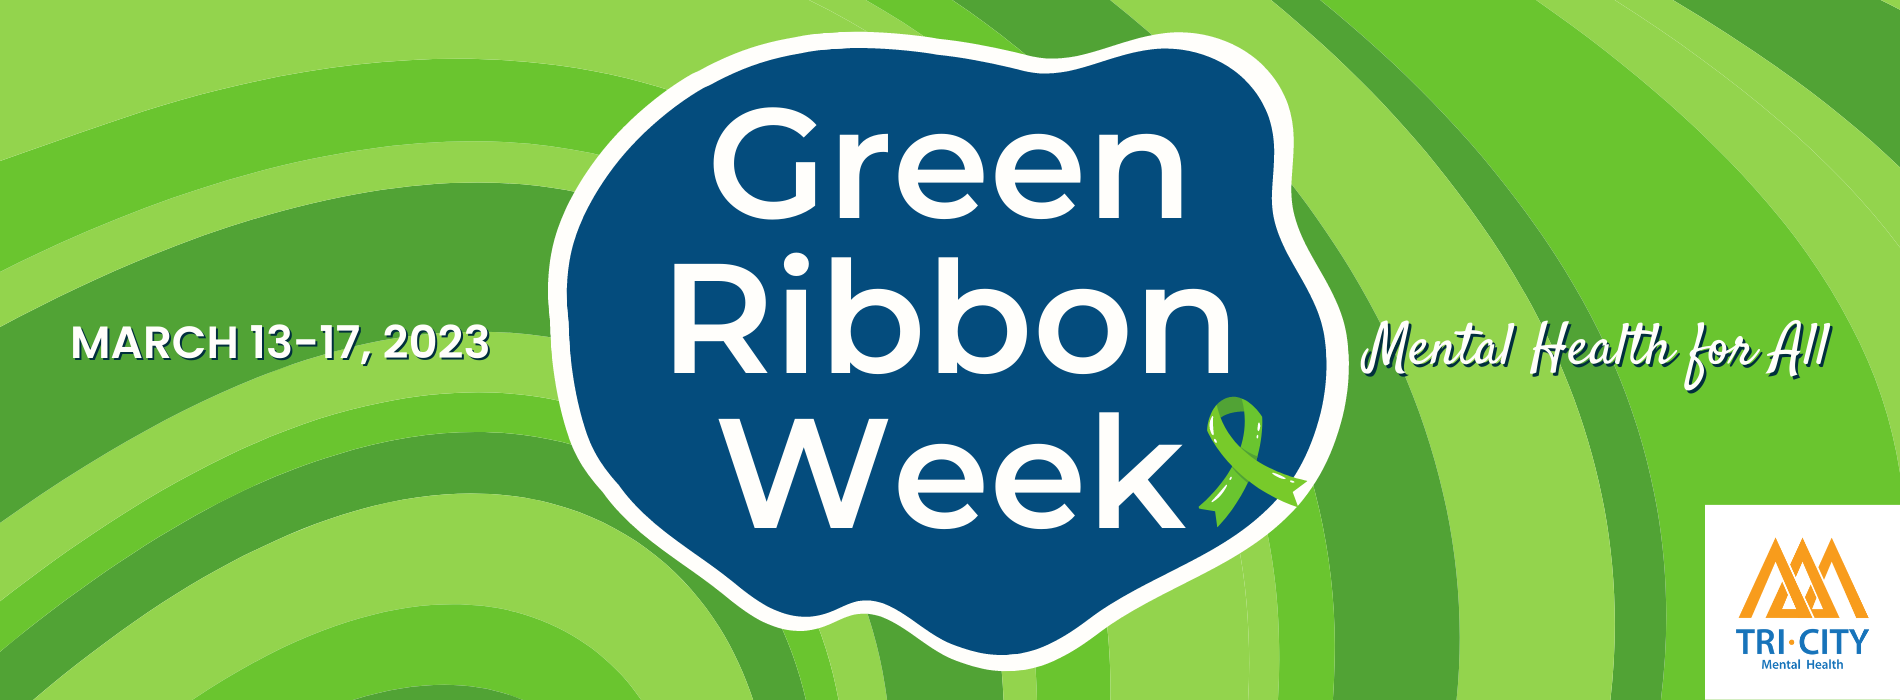 Green Ribbon Week 2023 - Tri-City Mental Health